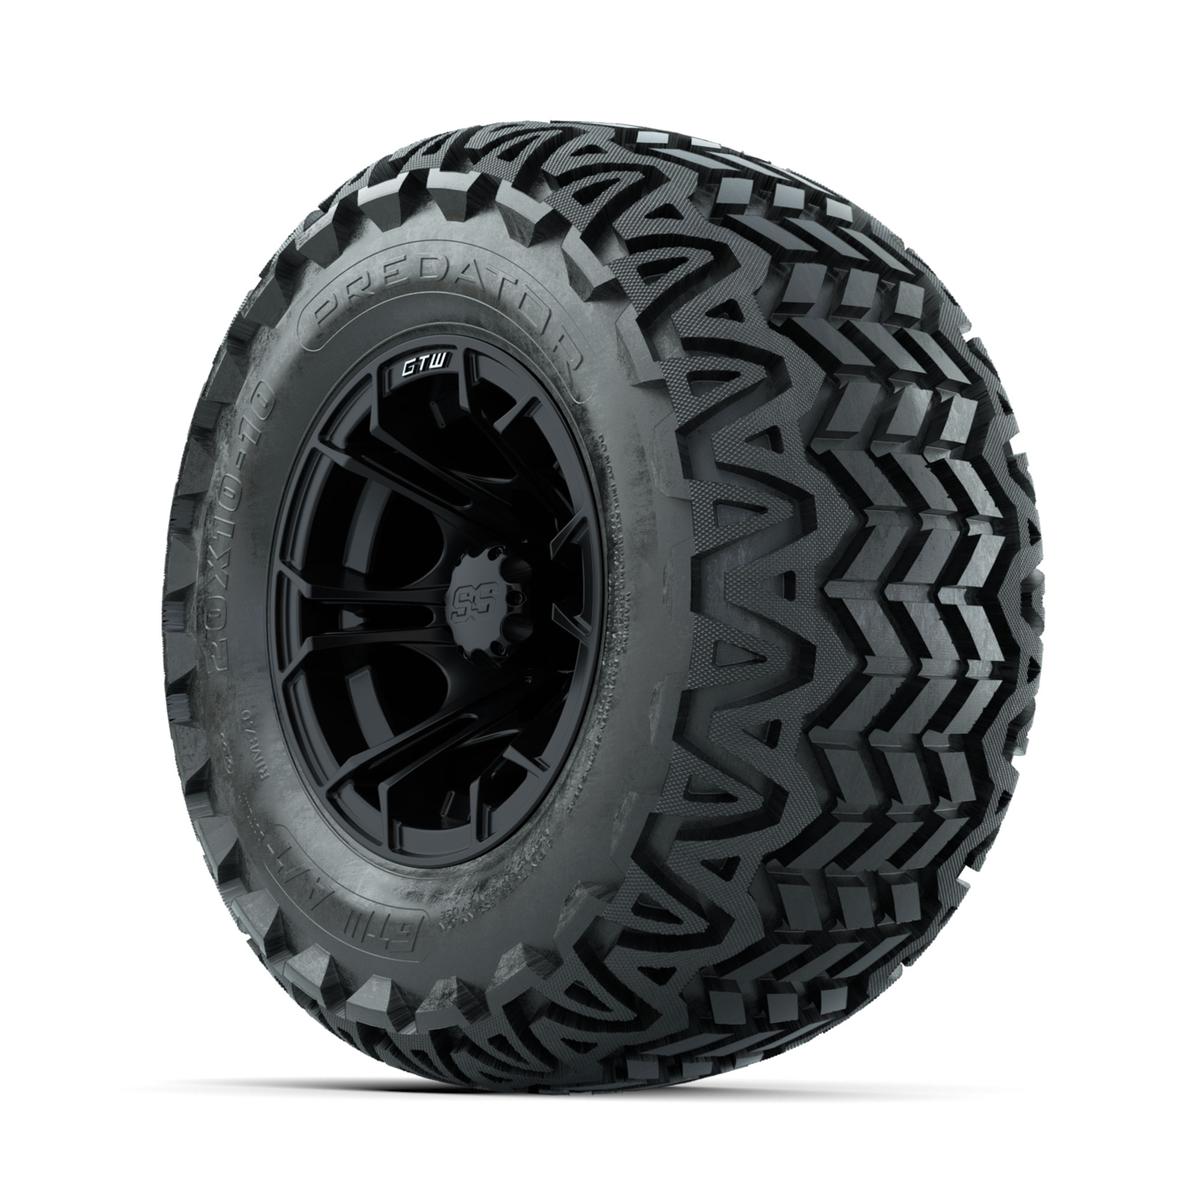 GTW Spyder Matte Black 10 in Wheels with 20x10-10 Predator All Terrain Tires – Full Set